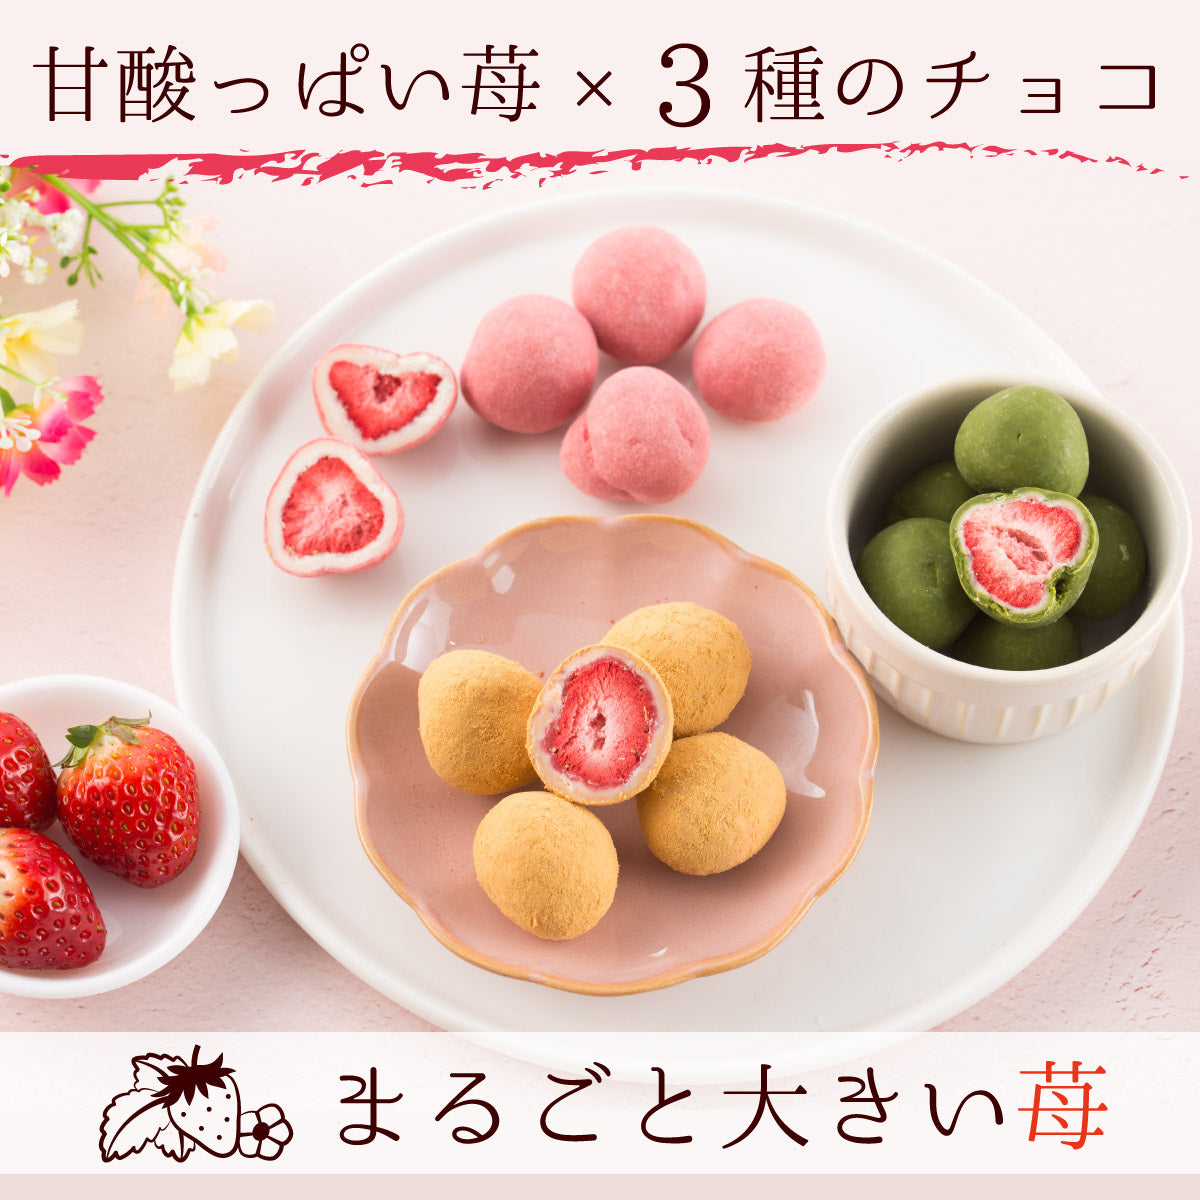 chocolate coated strawberries, japanese chocolate coated strawberries, strawberry chocolate, freeze dried strawberries coated with chocolate